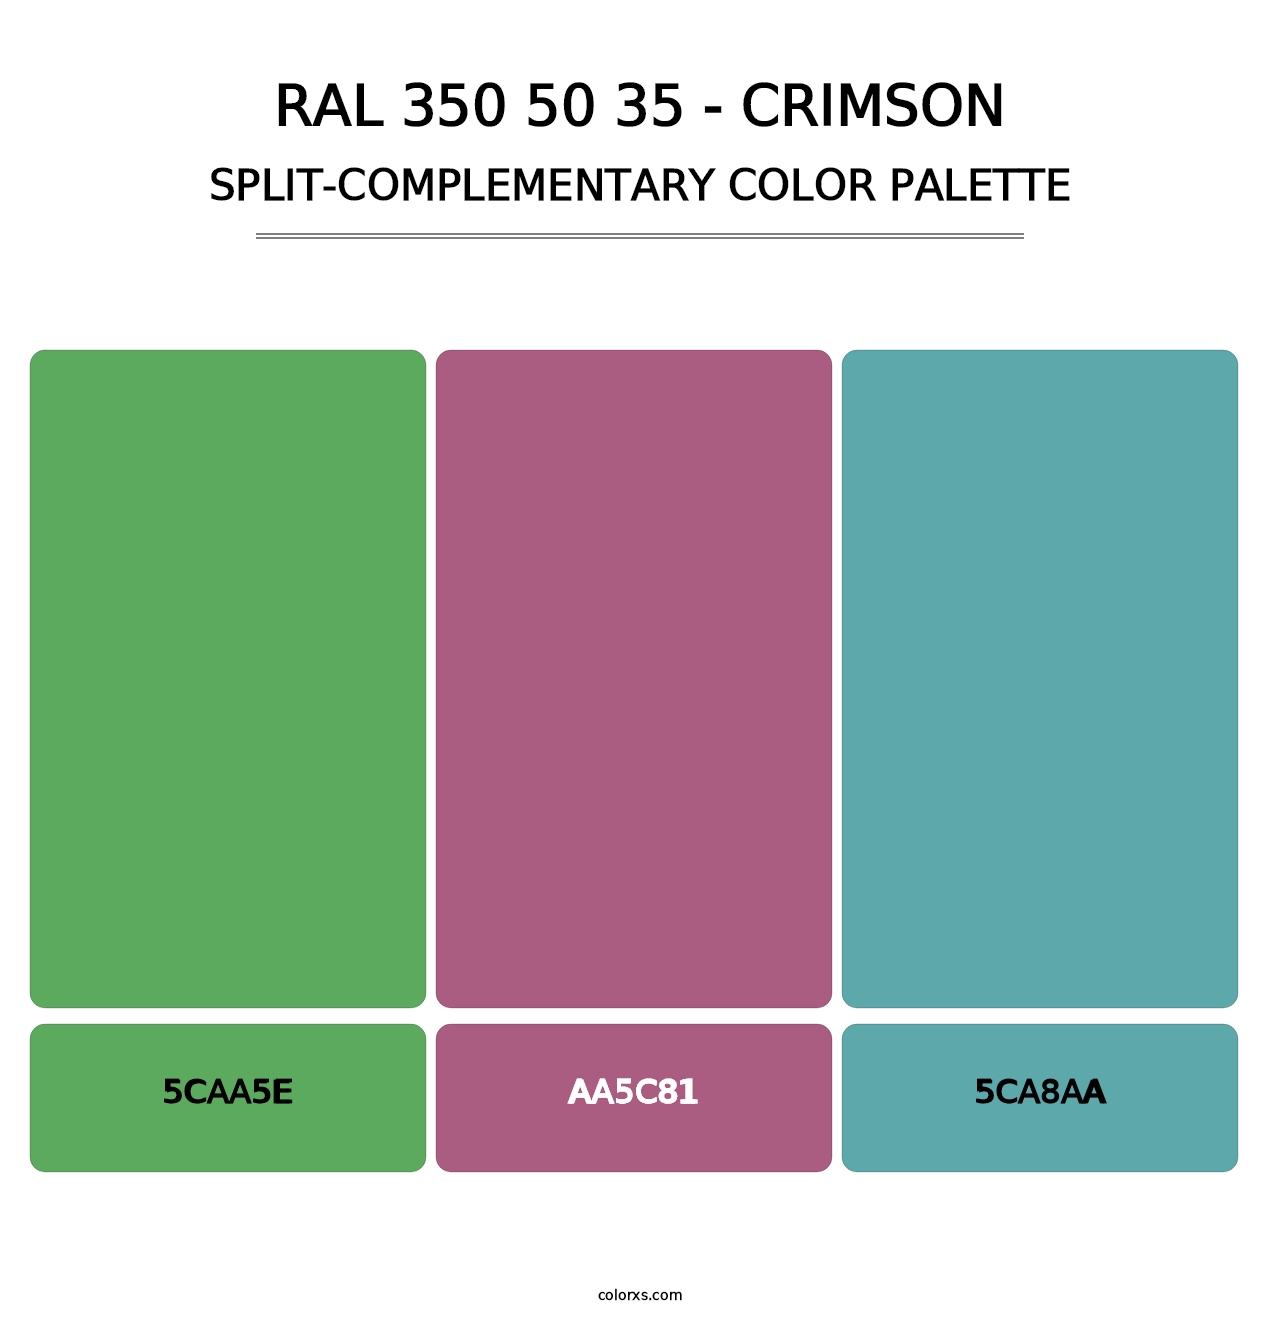 RAL 350 50 35 - Crimson - Split-Complementary Color Palette